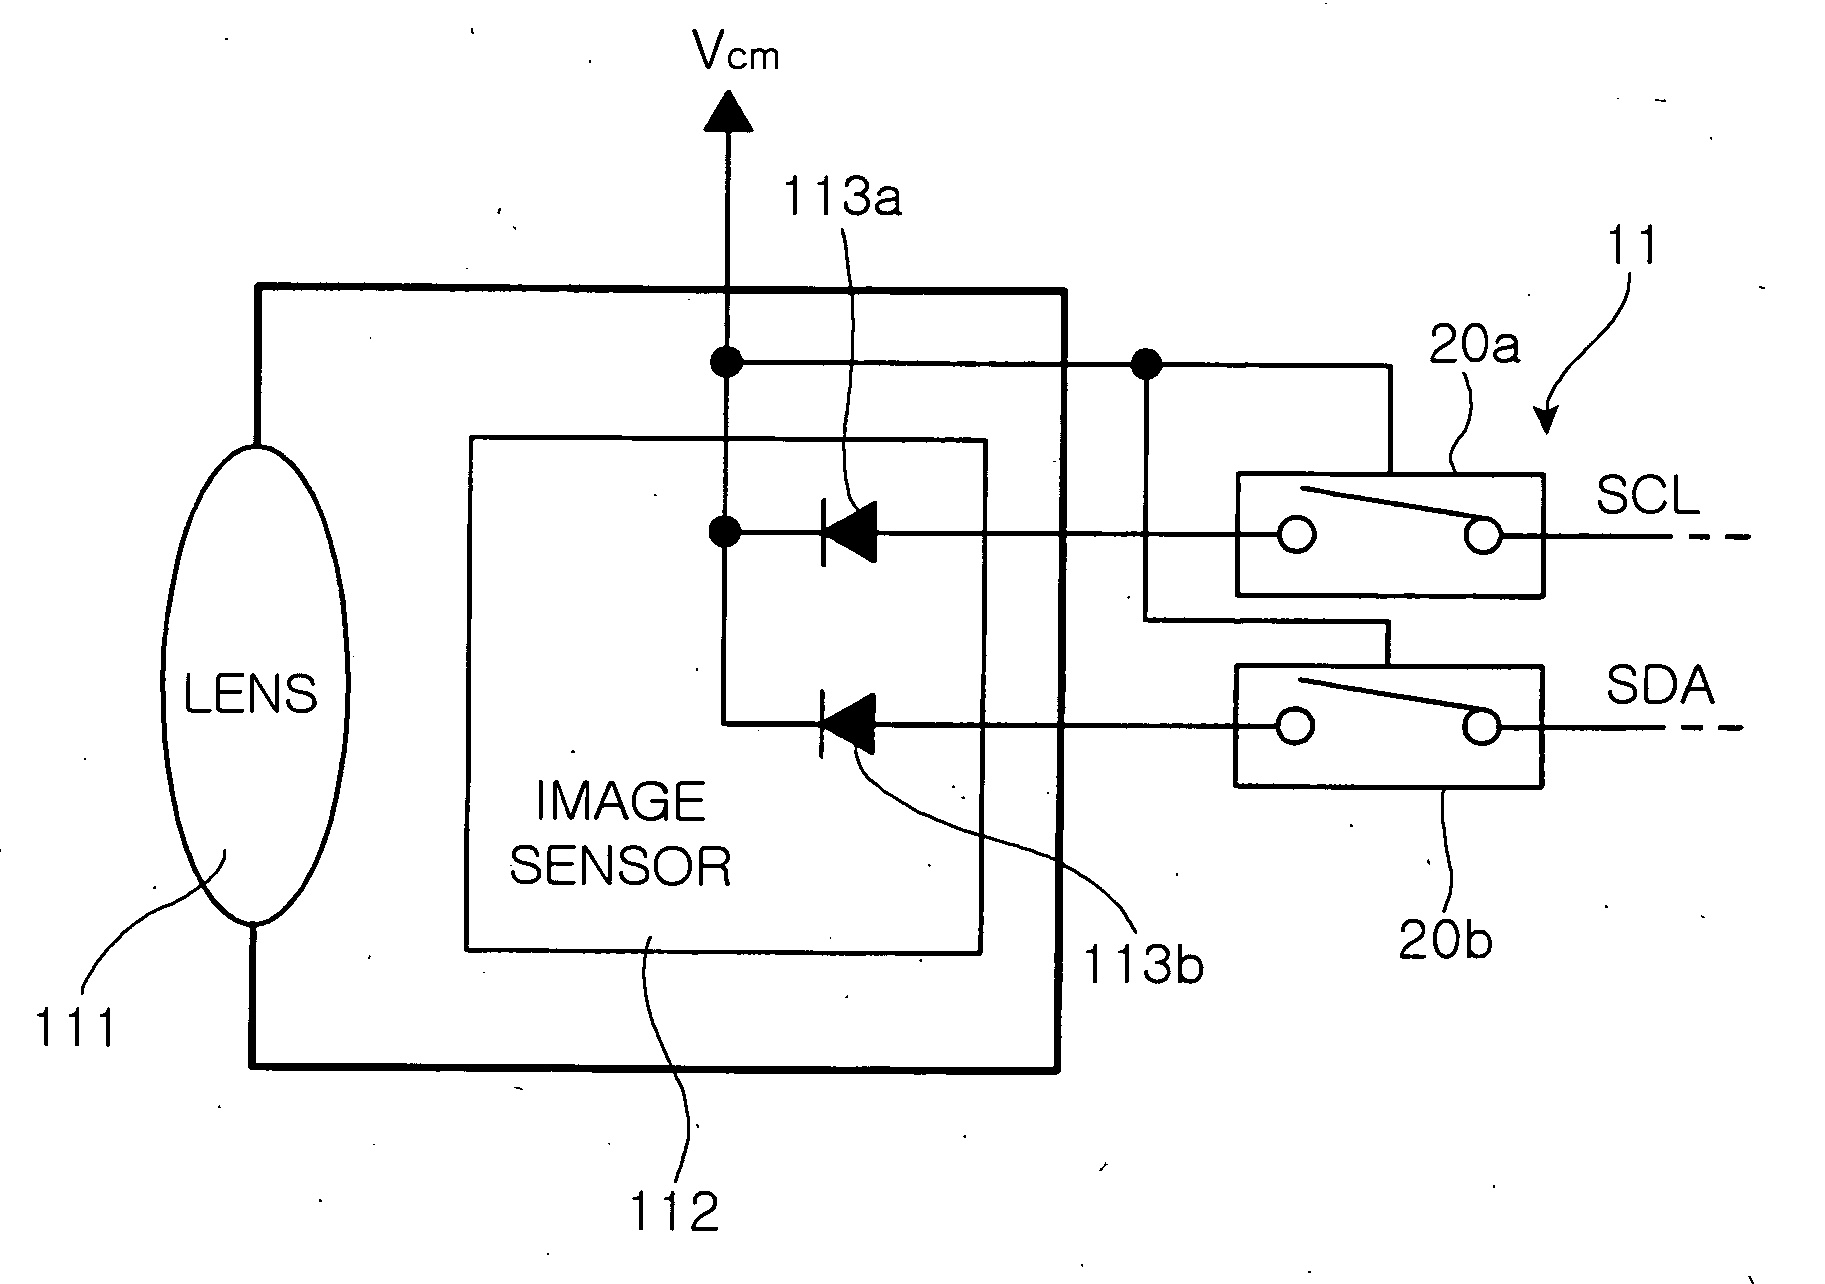 Camera module for communicating through I2C method